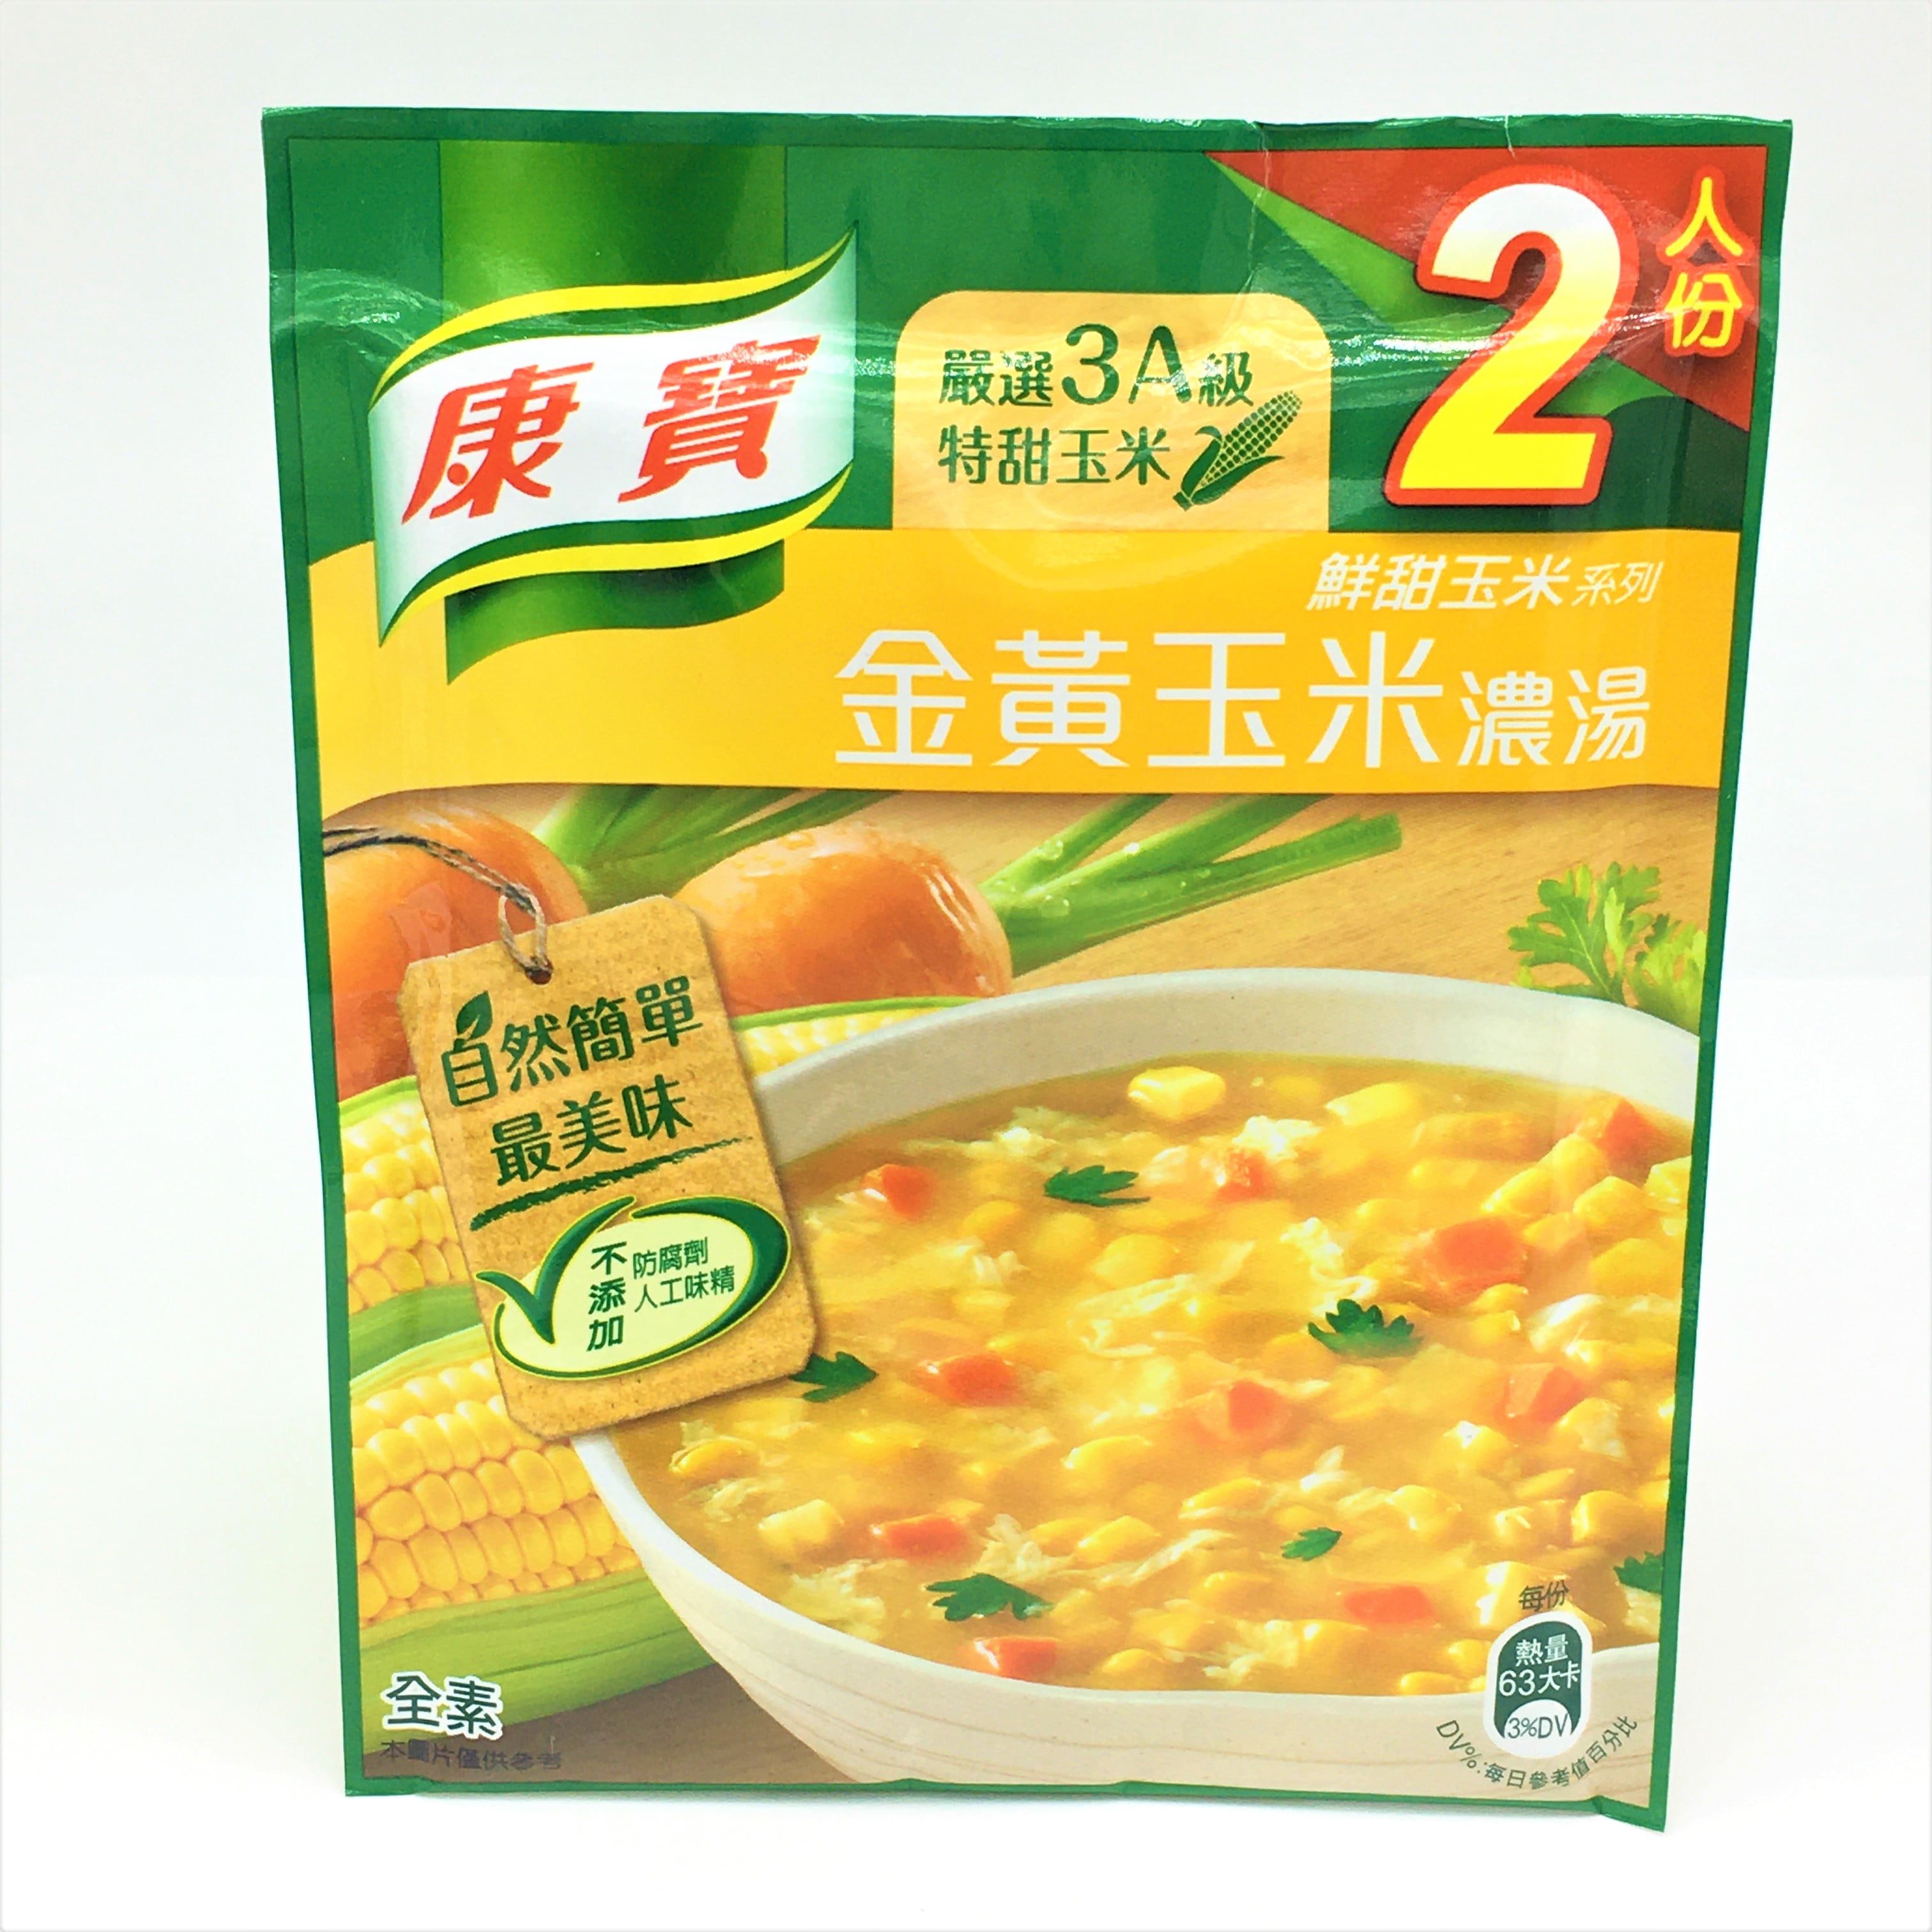 Buy Knorr golden eyes beef soup cubes - 130g online